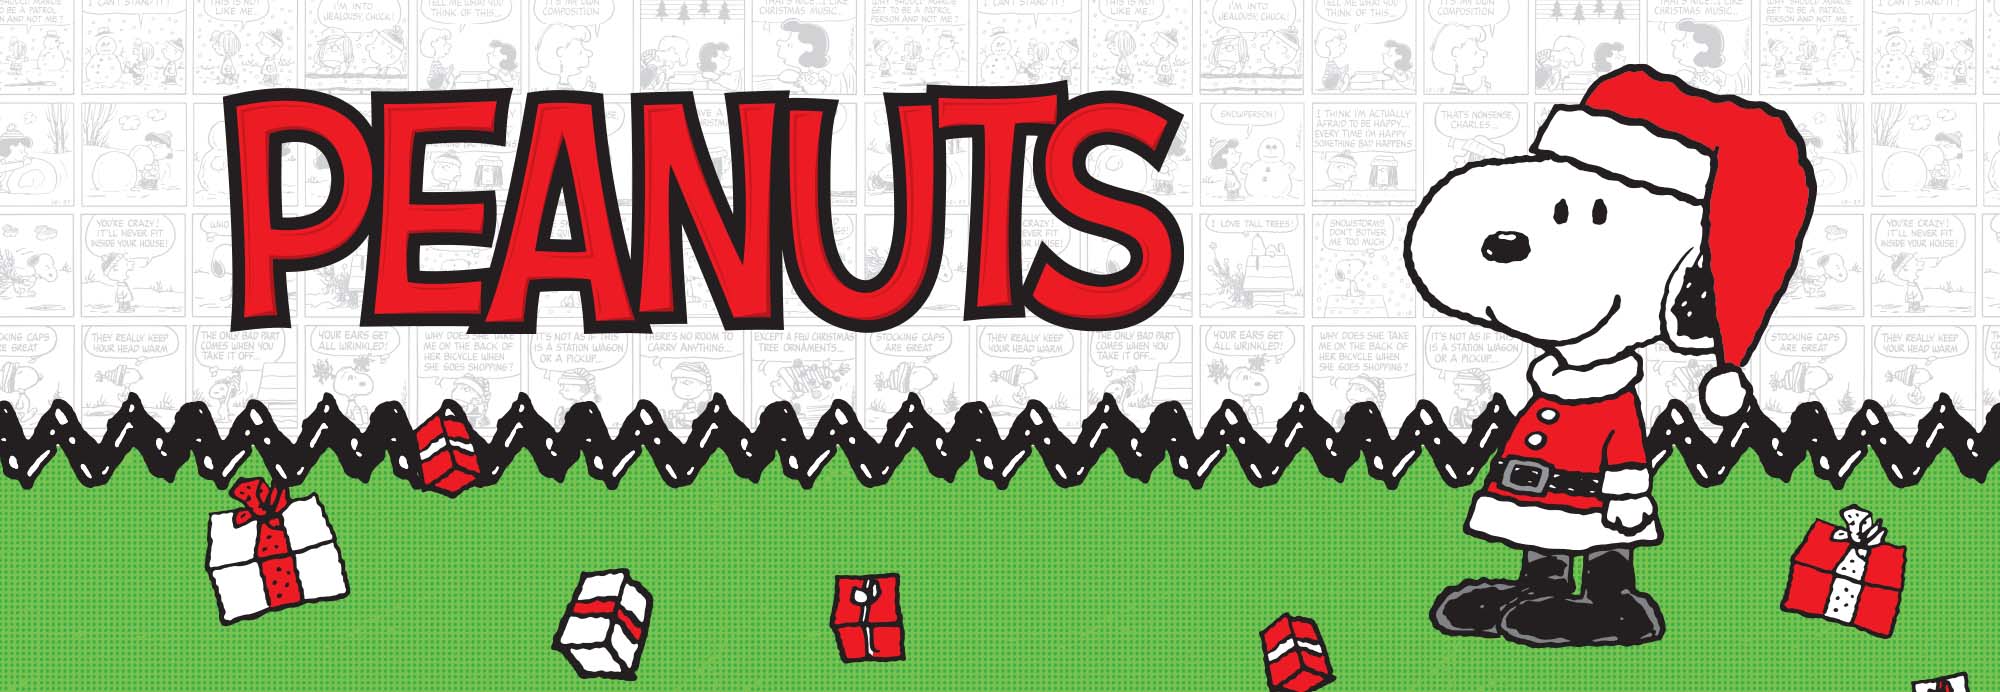 Peanuts desktop banner